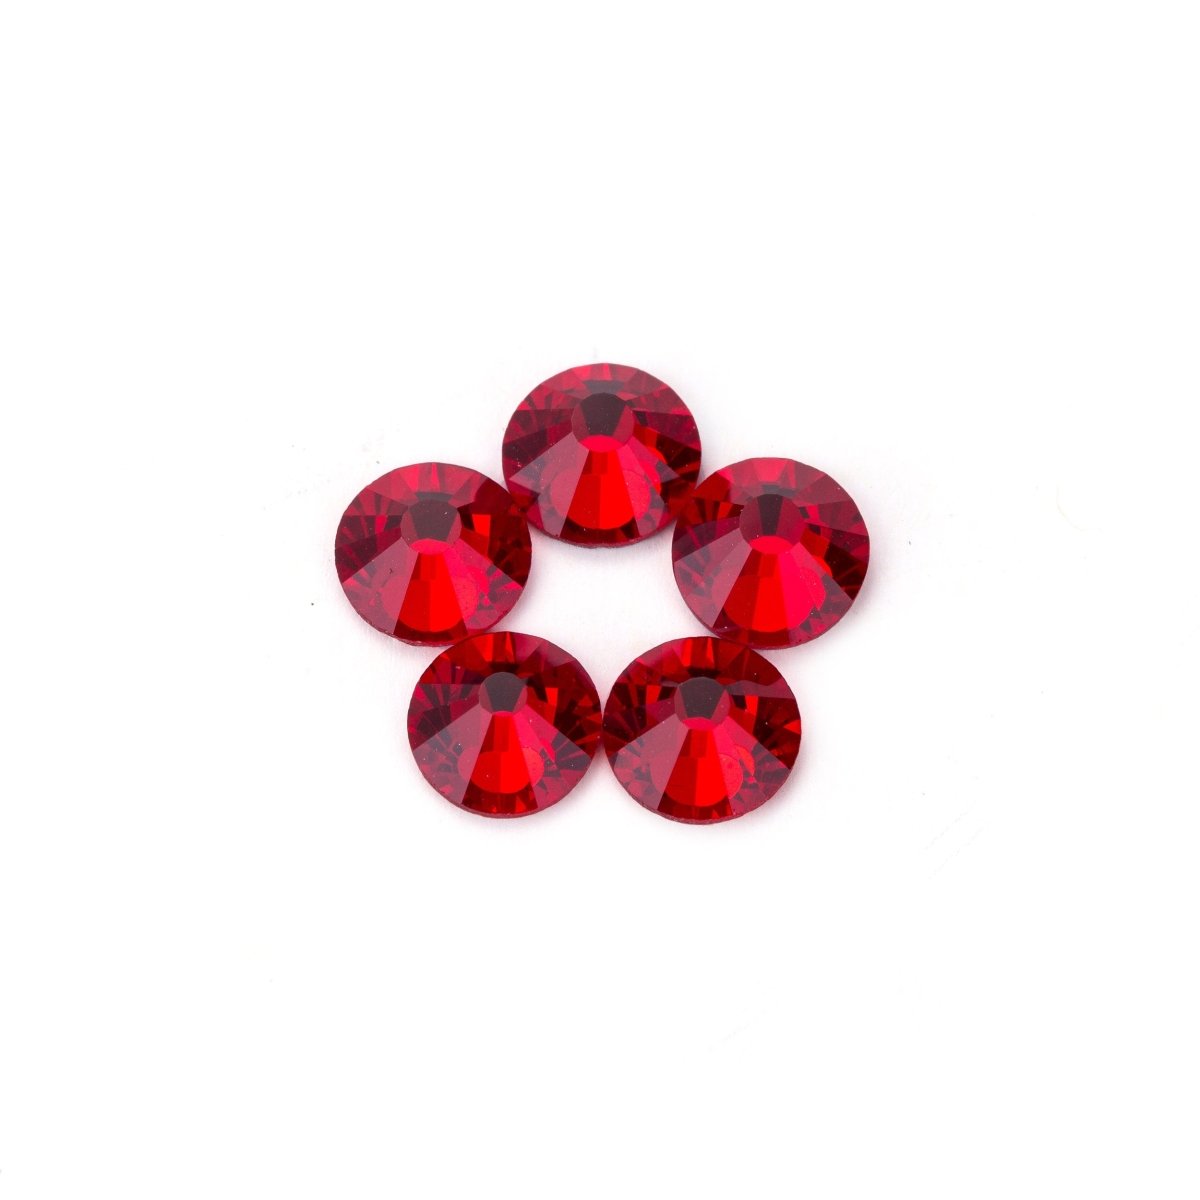 720 pcs Mixed Size Crystal Bright Light Red Siam Rhinestone Flat Back Crystal Rhinestone Supreme Quality NoHotFix Glass Crystal Beads ss6-30 - DLUXCA